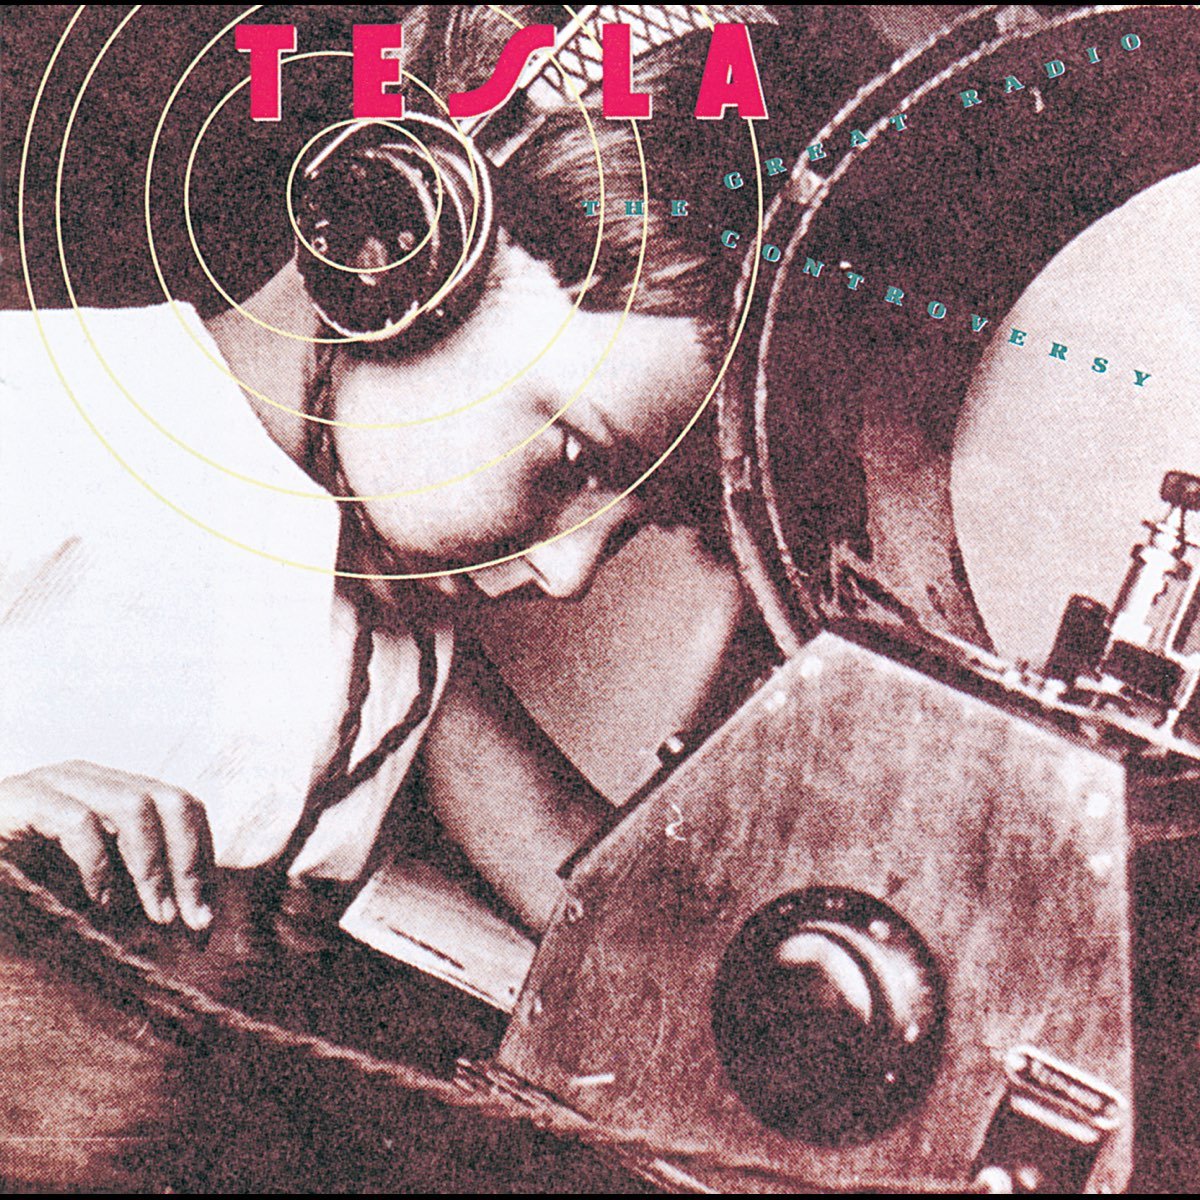 Real to Reel (Tesla album) - Wikipedia